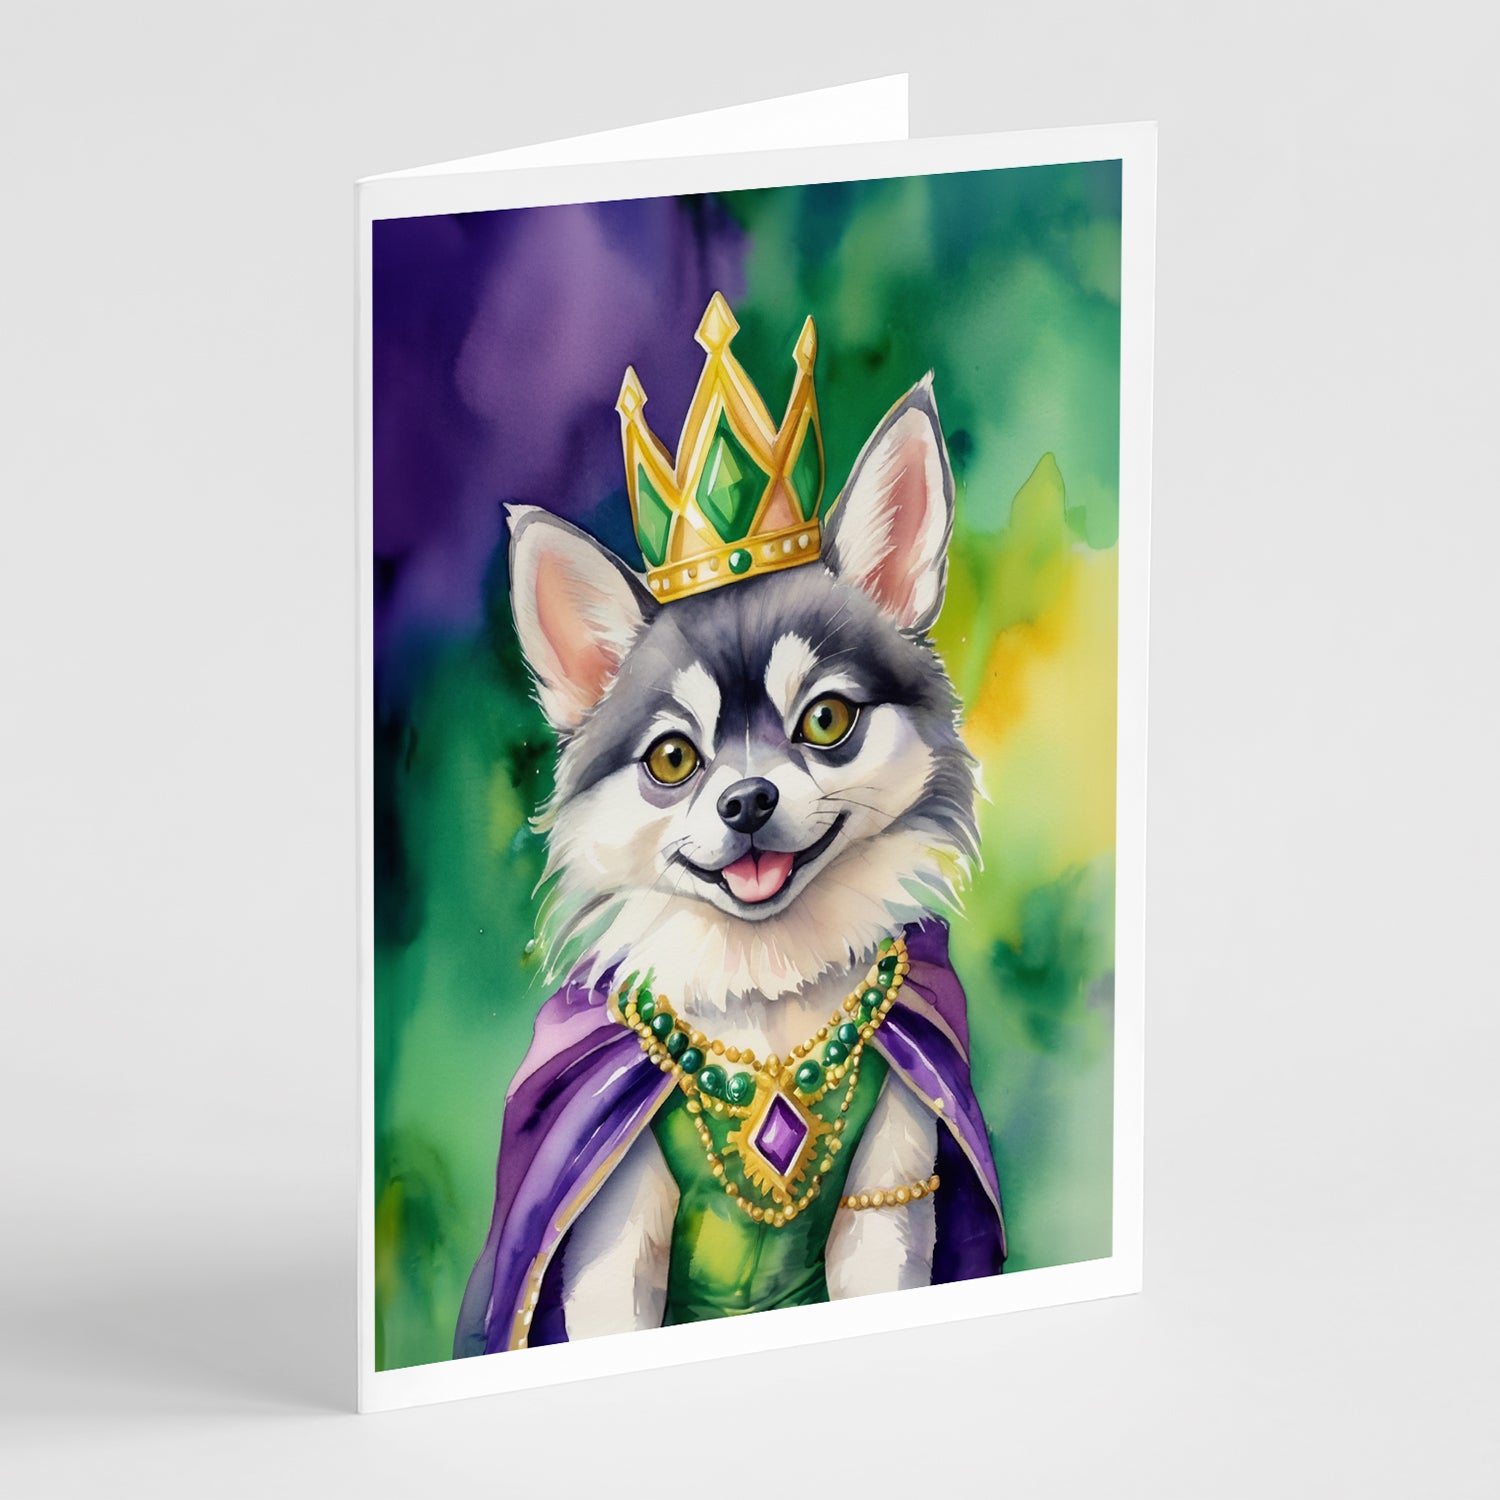 Buy this Alaskan Klee Kai King of Mardi Gras Greeting Cards Pack of 8